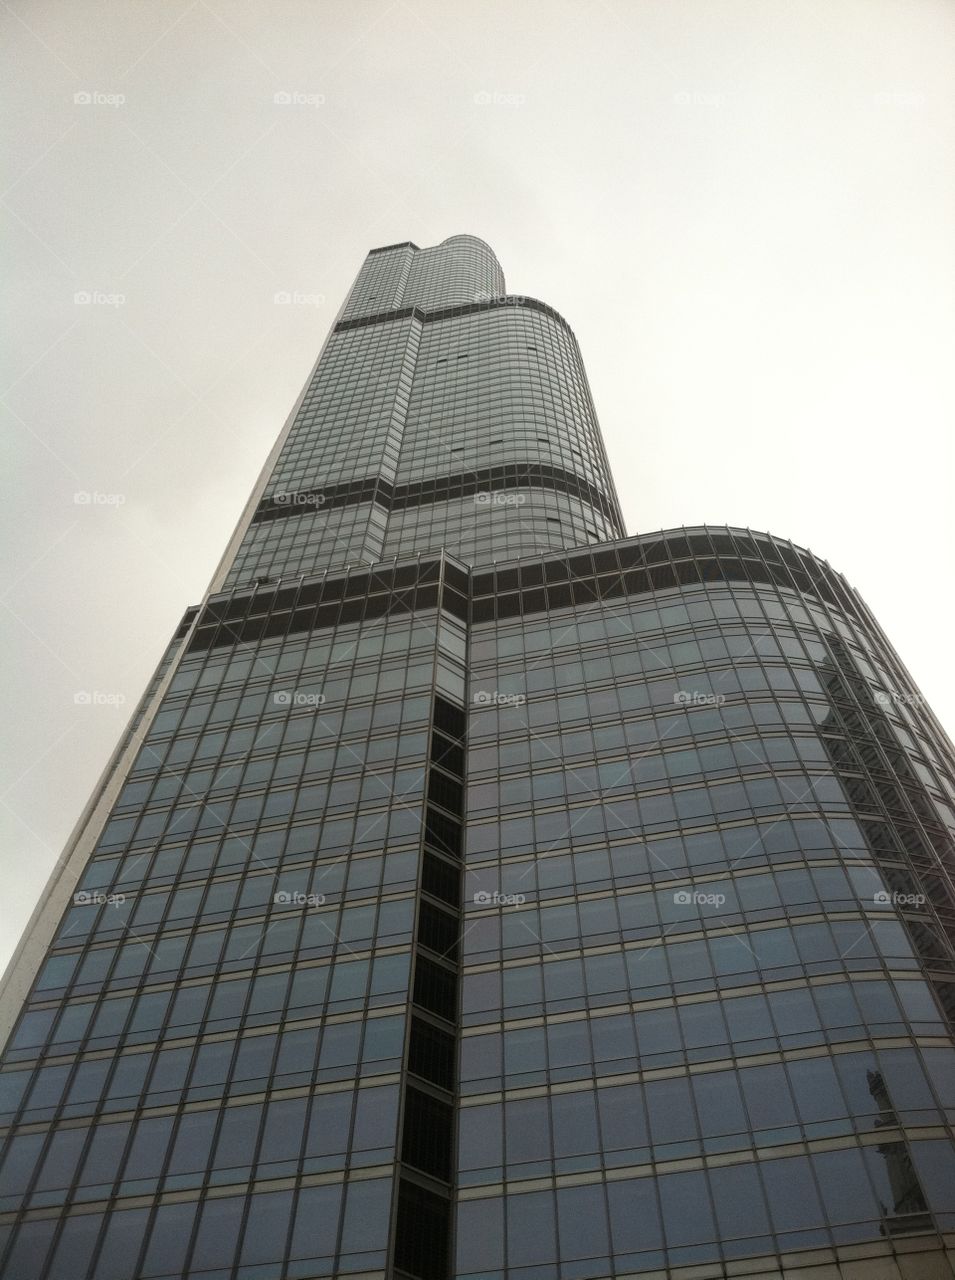 Trump tower Chicago